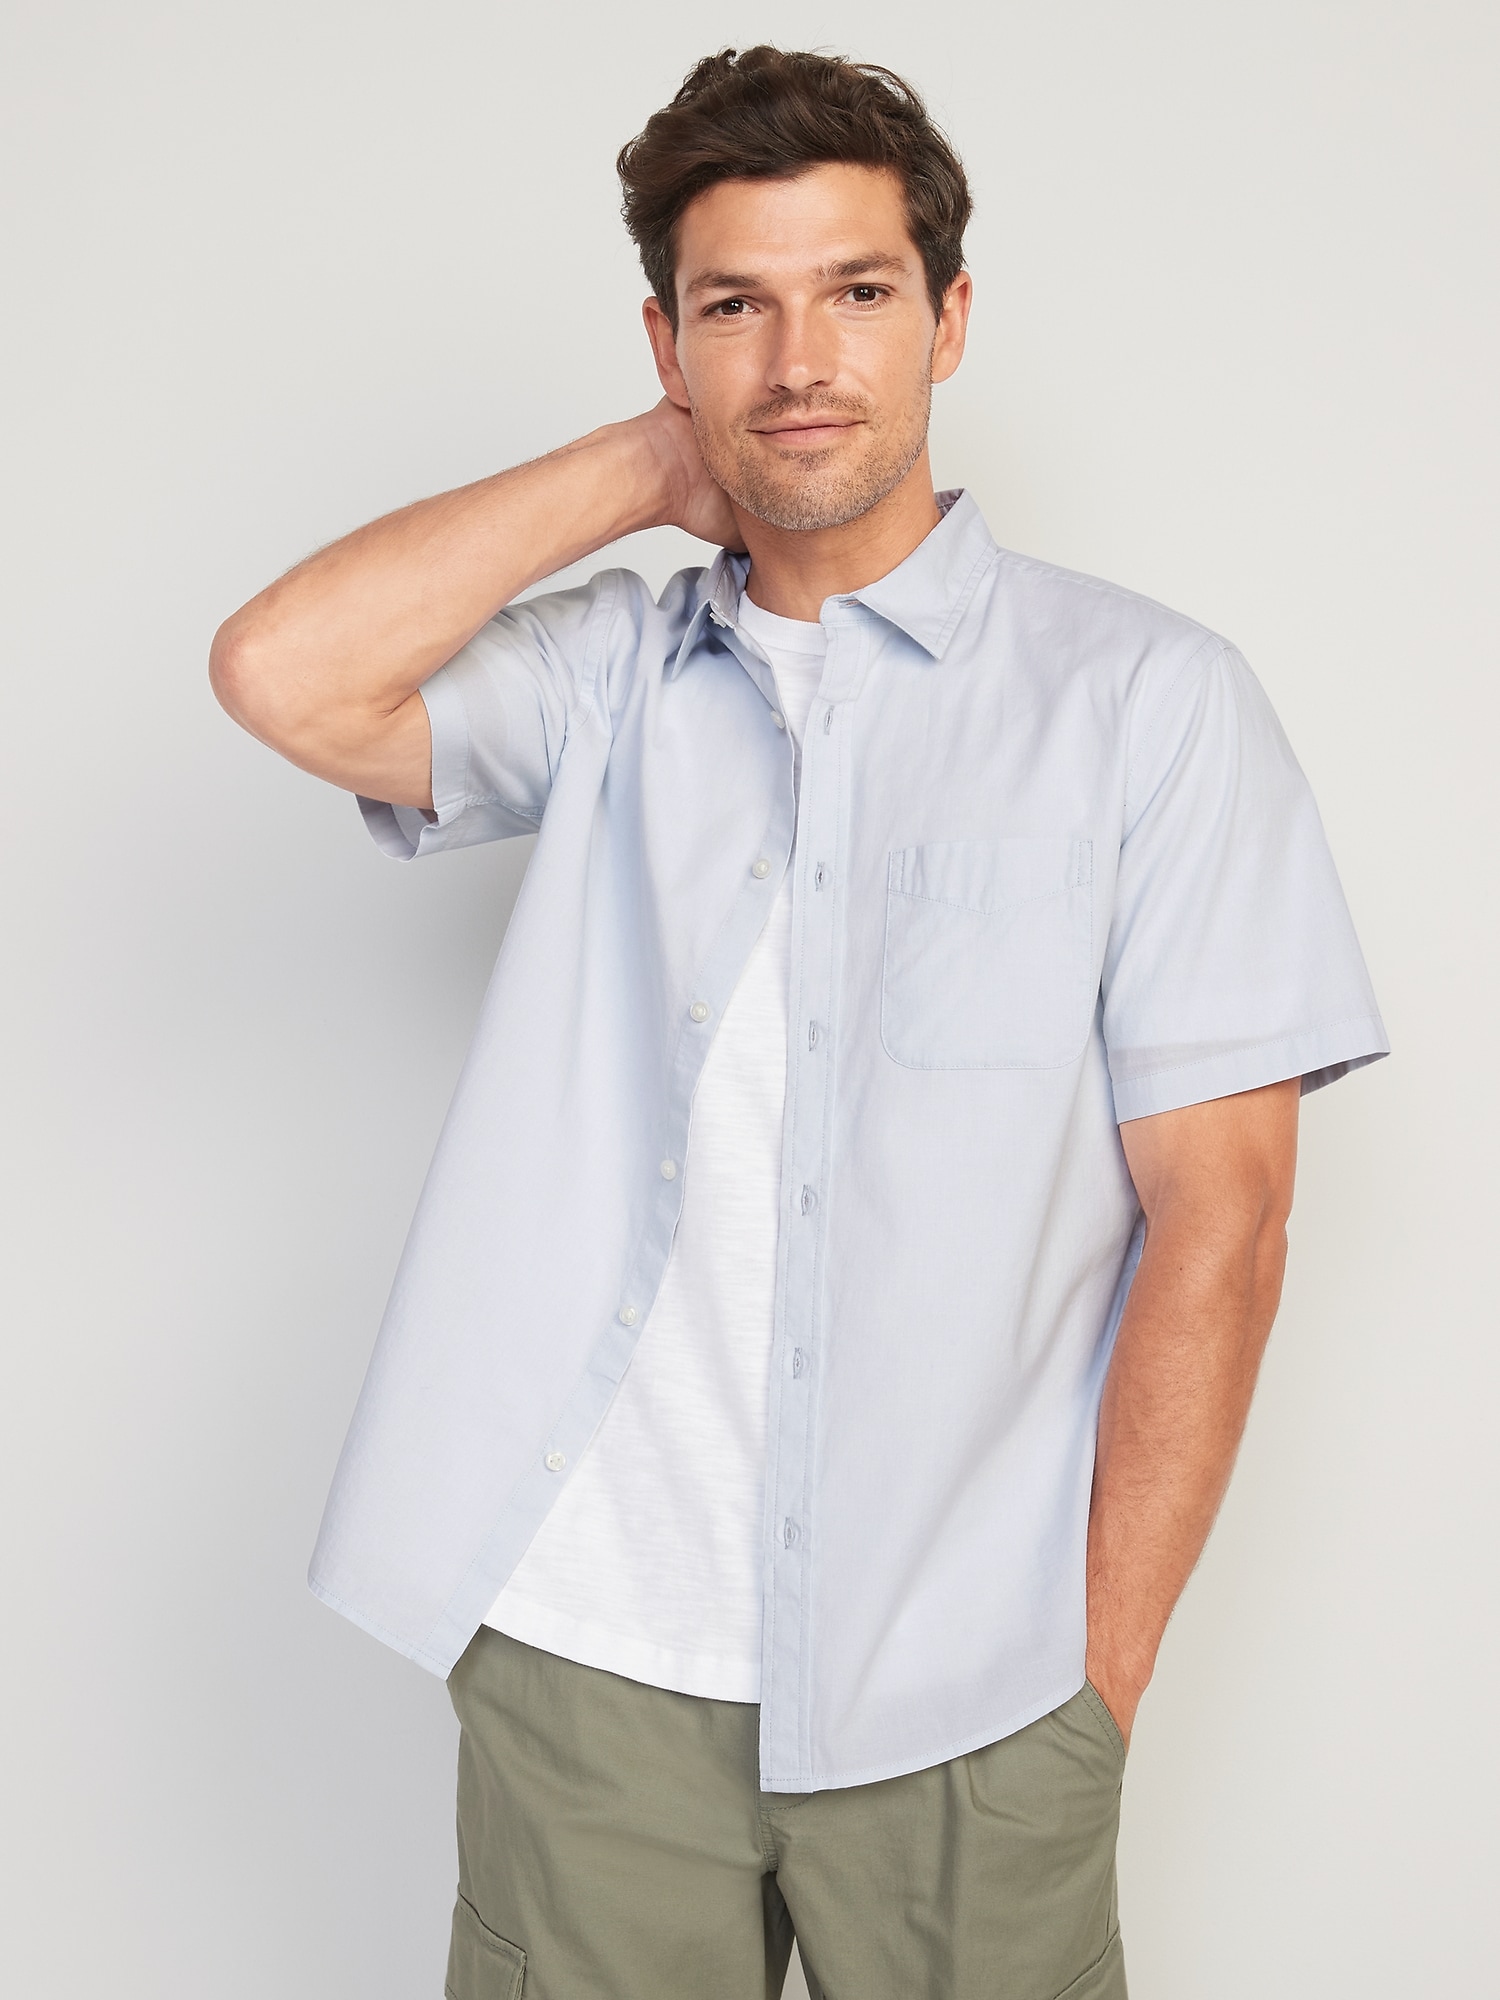 Everyday Built-In Flex Short-Sleeve Shirt for Men | Old Navy